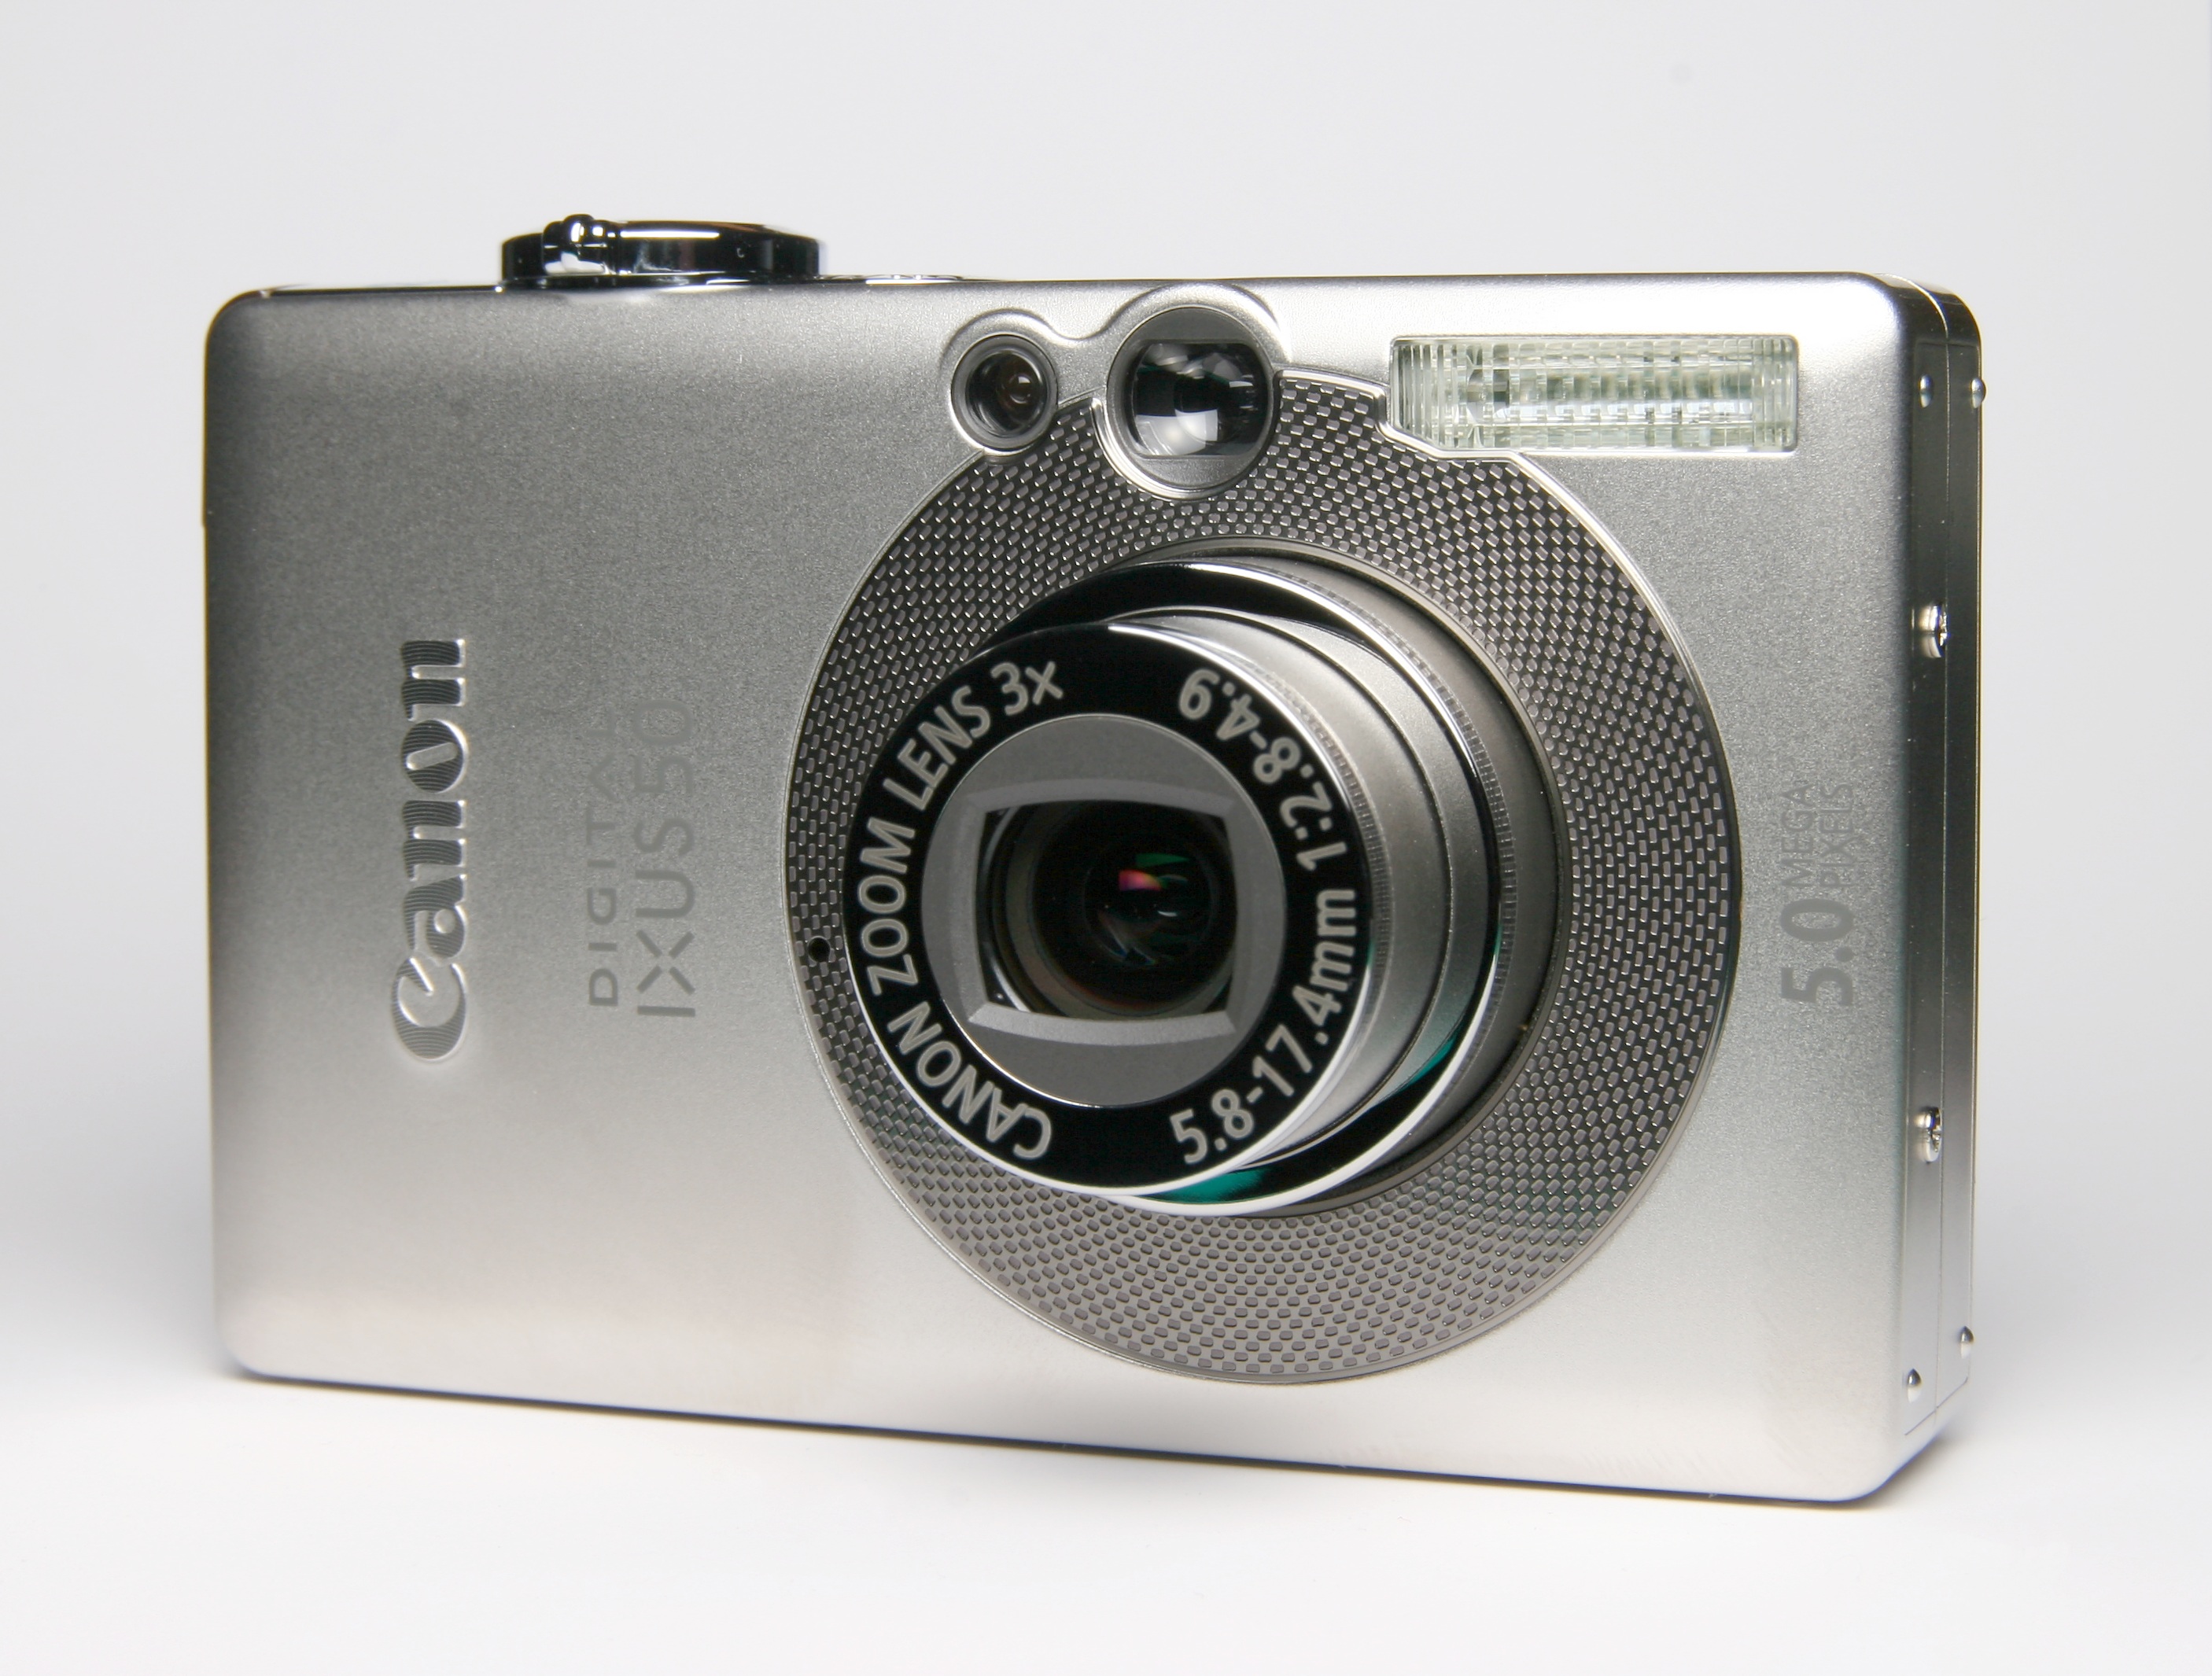 File:Canon Digital Ixus 50 front.jpg - Wikimedia Commons